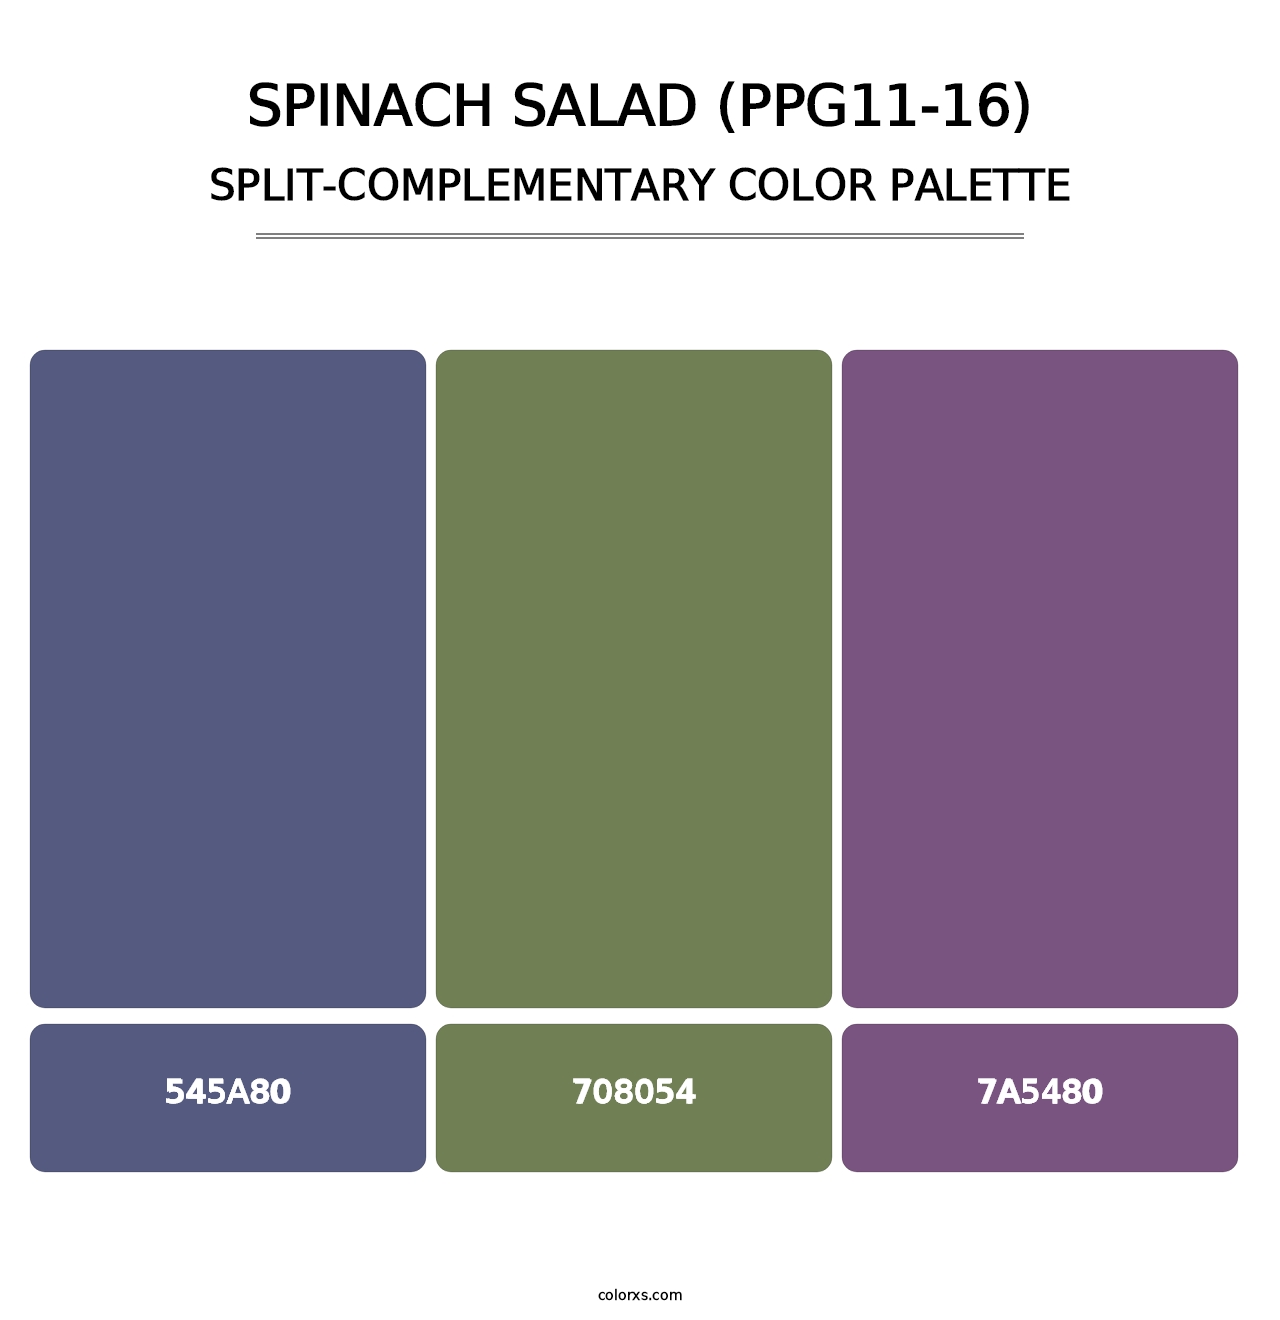 Spinach Salad (PPG11-16) - Split-Complementary Color Palette